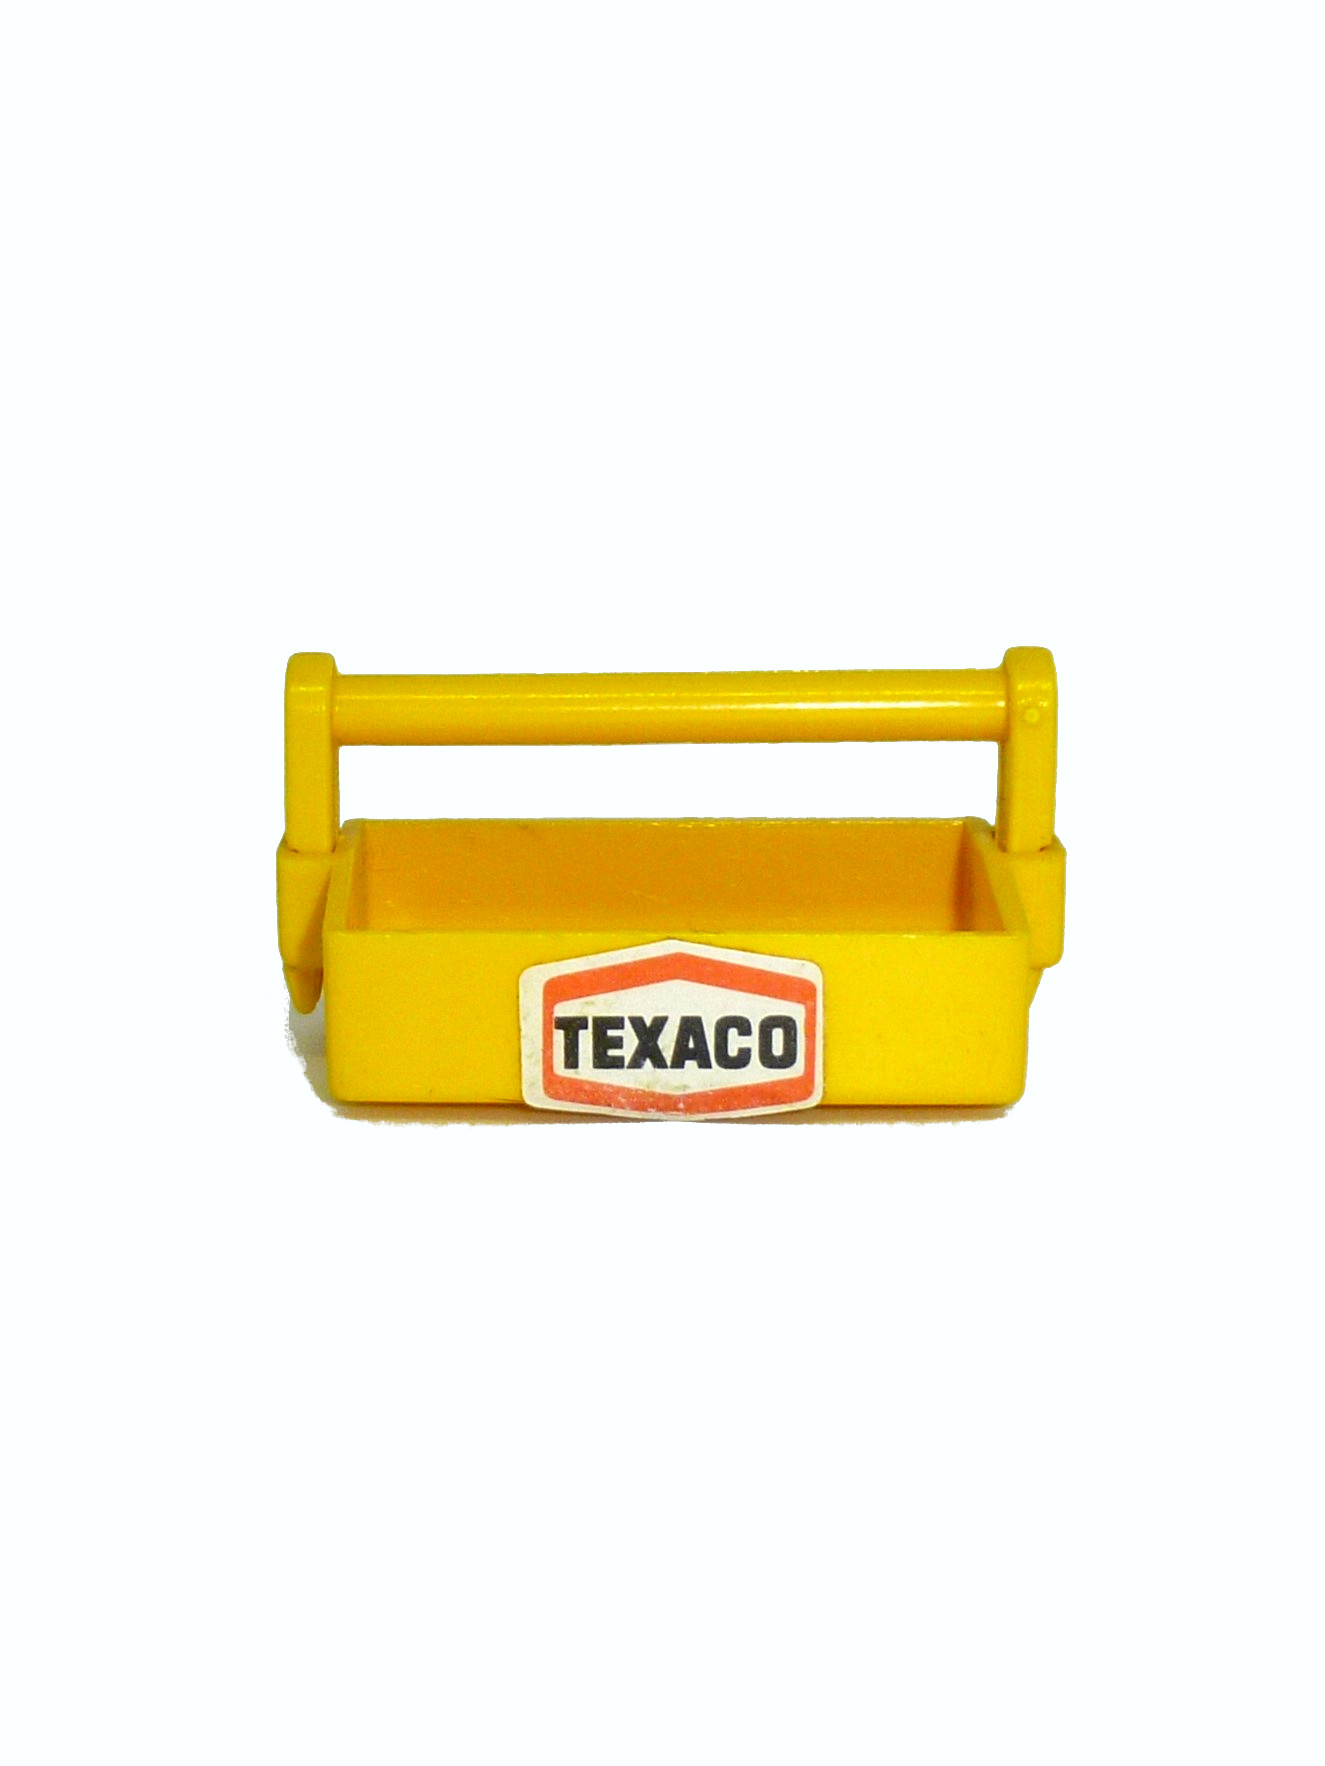 toolbox Texaco Geobra 1974